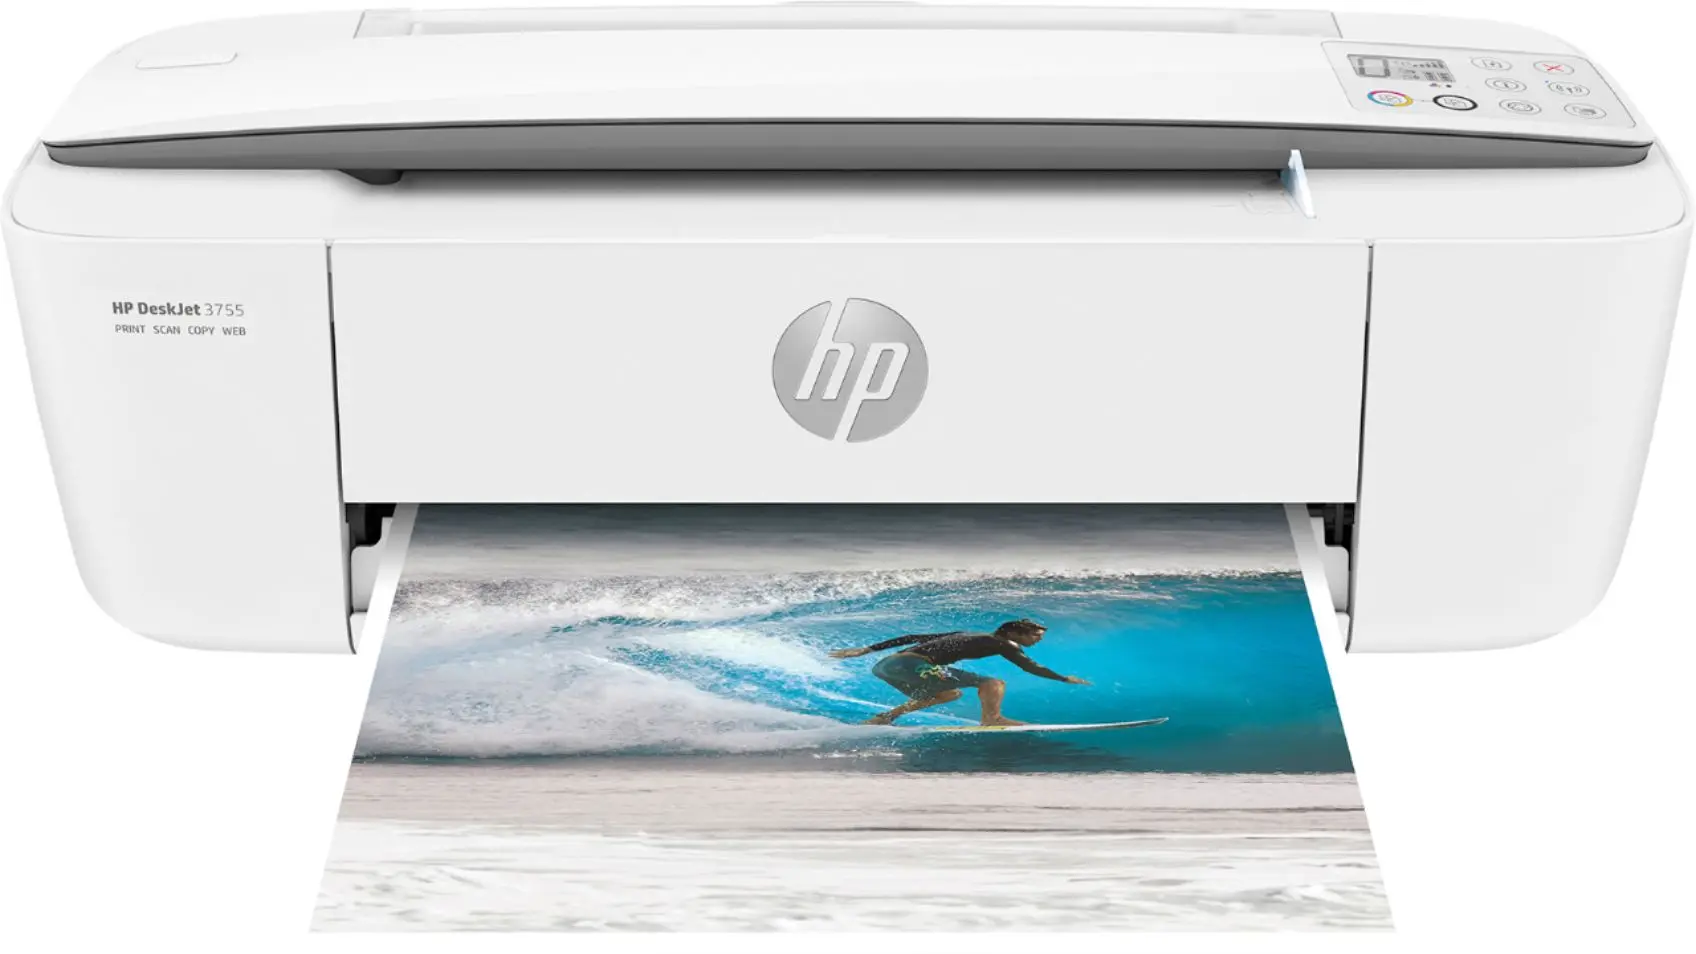 hewlett packard deskjet 948c printer - How to install HP 2640 printer